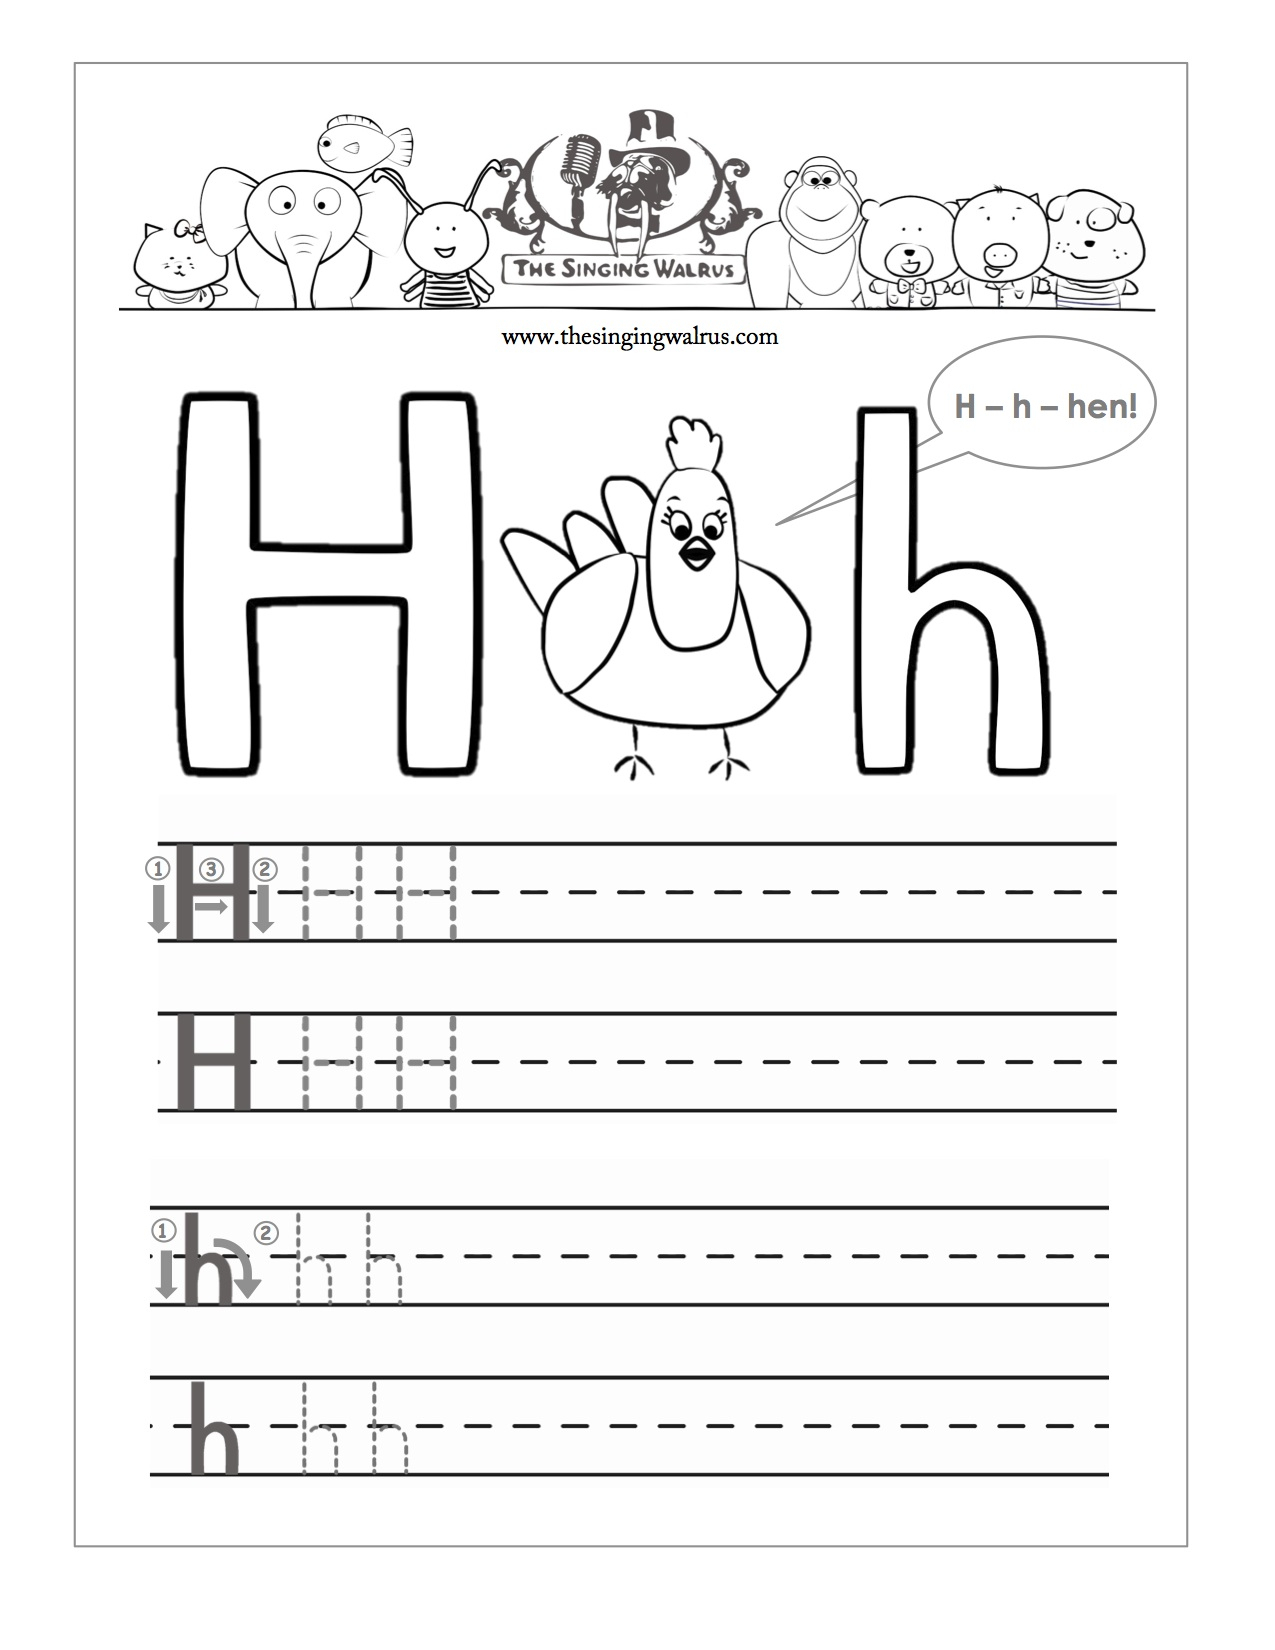 14 Enjoyable Letter H Worksheets For Kids | Kittybabylove intended for Letter H Worksheets For Toddlers